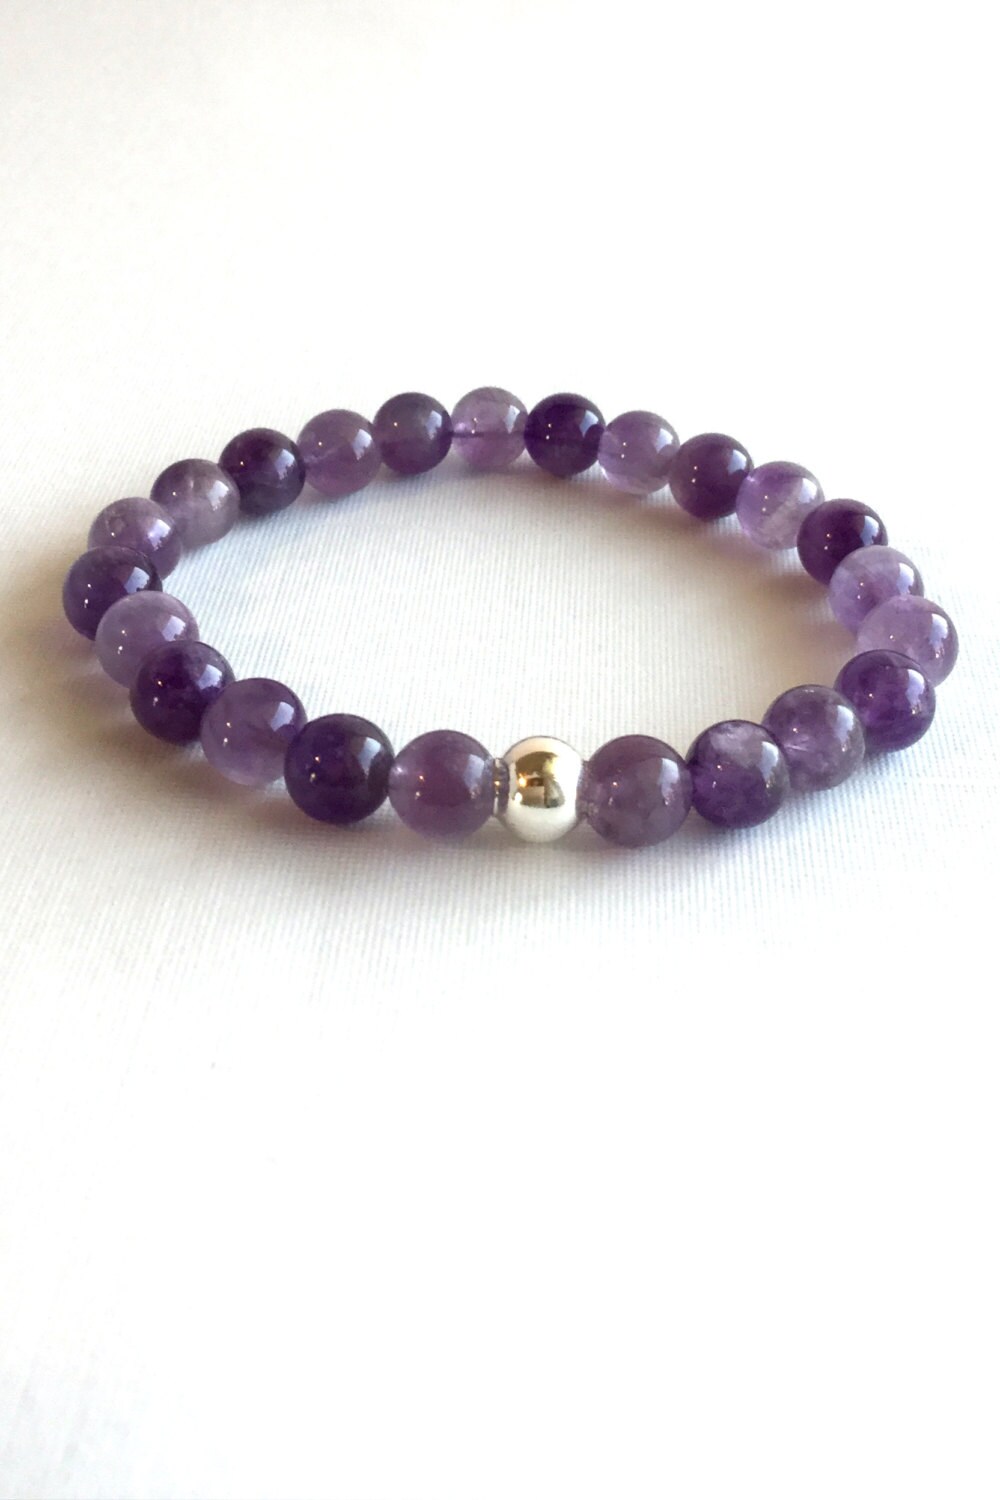 Natural Amethyst Bracelet Round Purple Stone by GemsByKelley